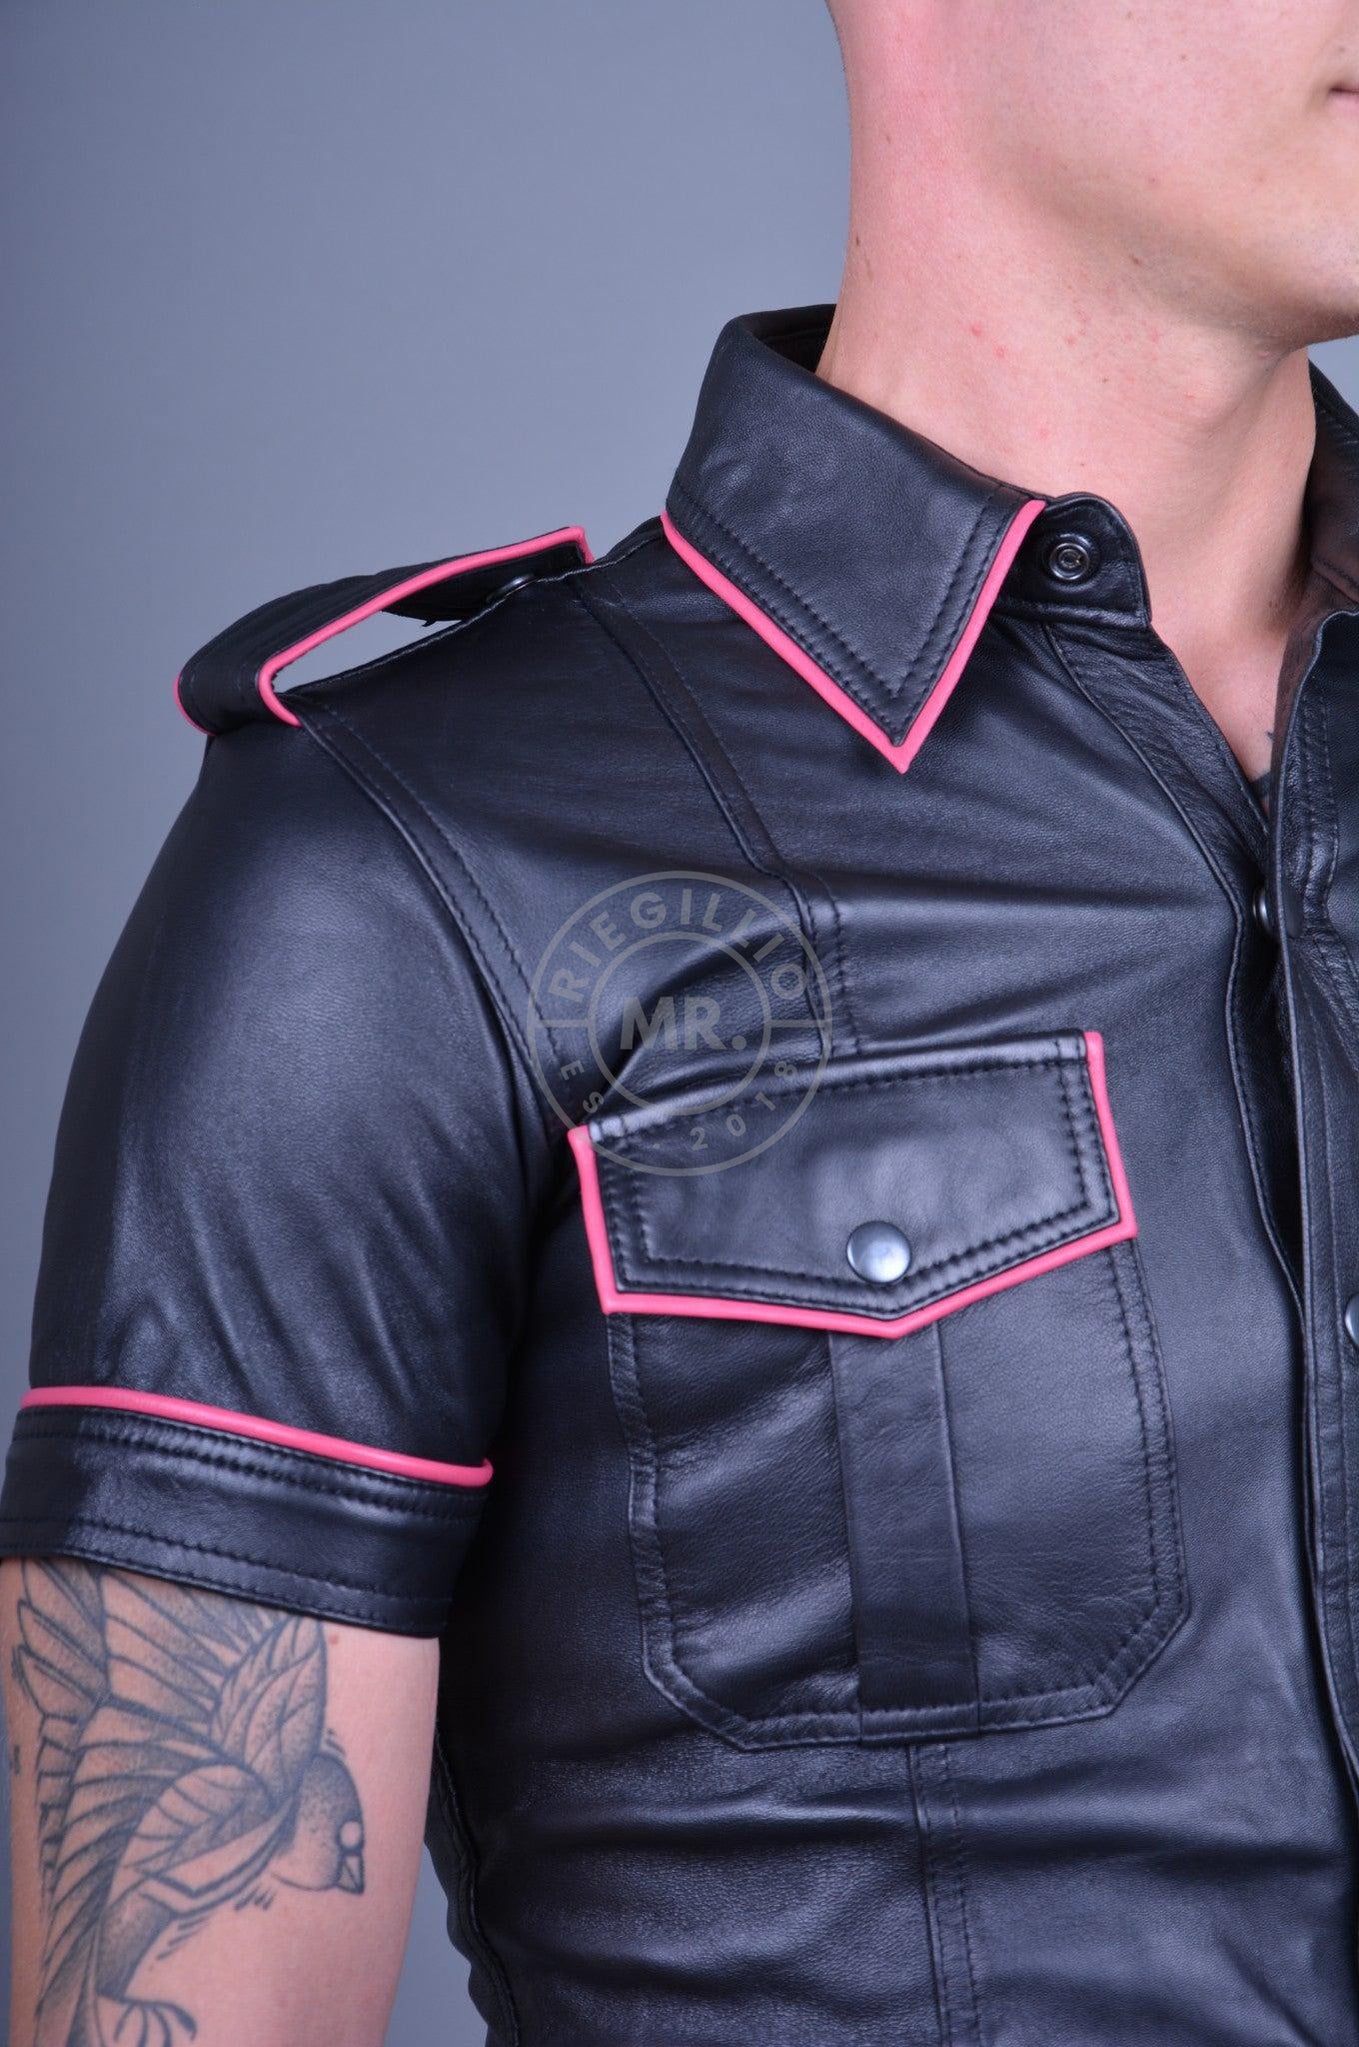 Black Leather Shirt - PINK Piping-at MR. Riegillio